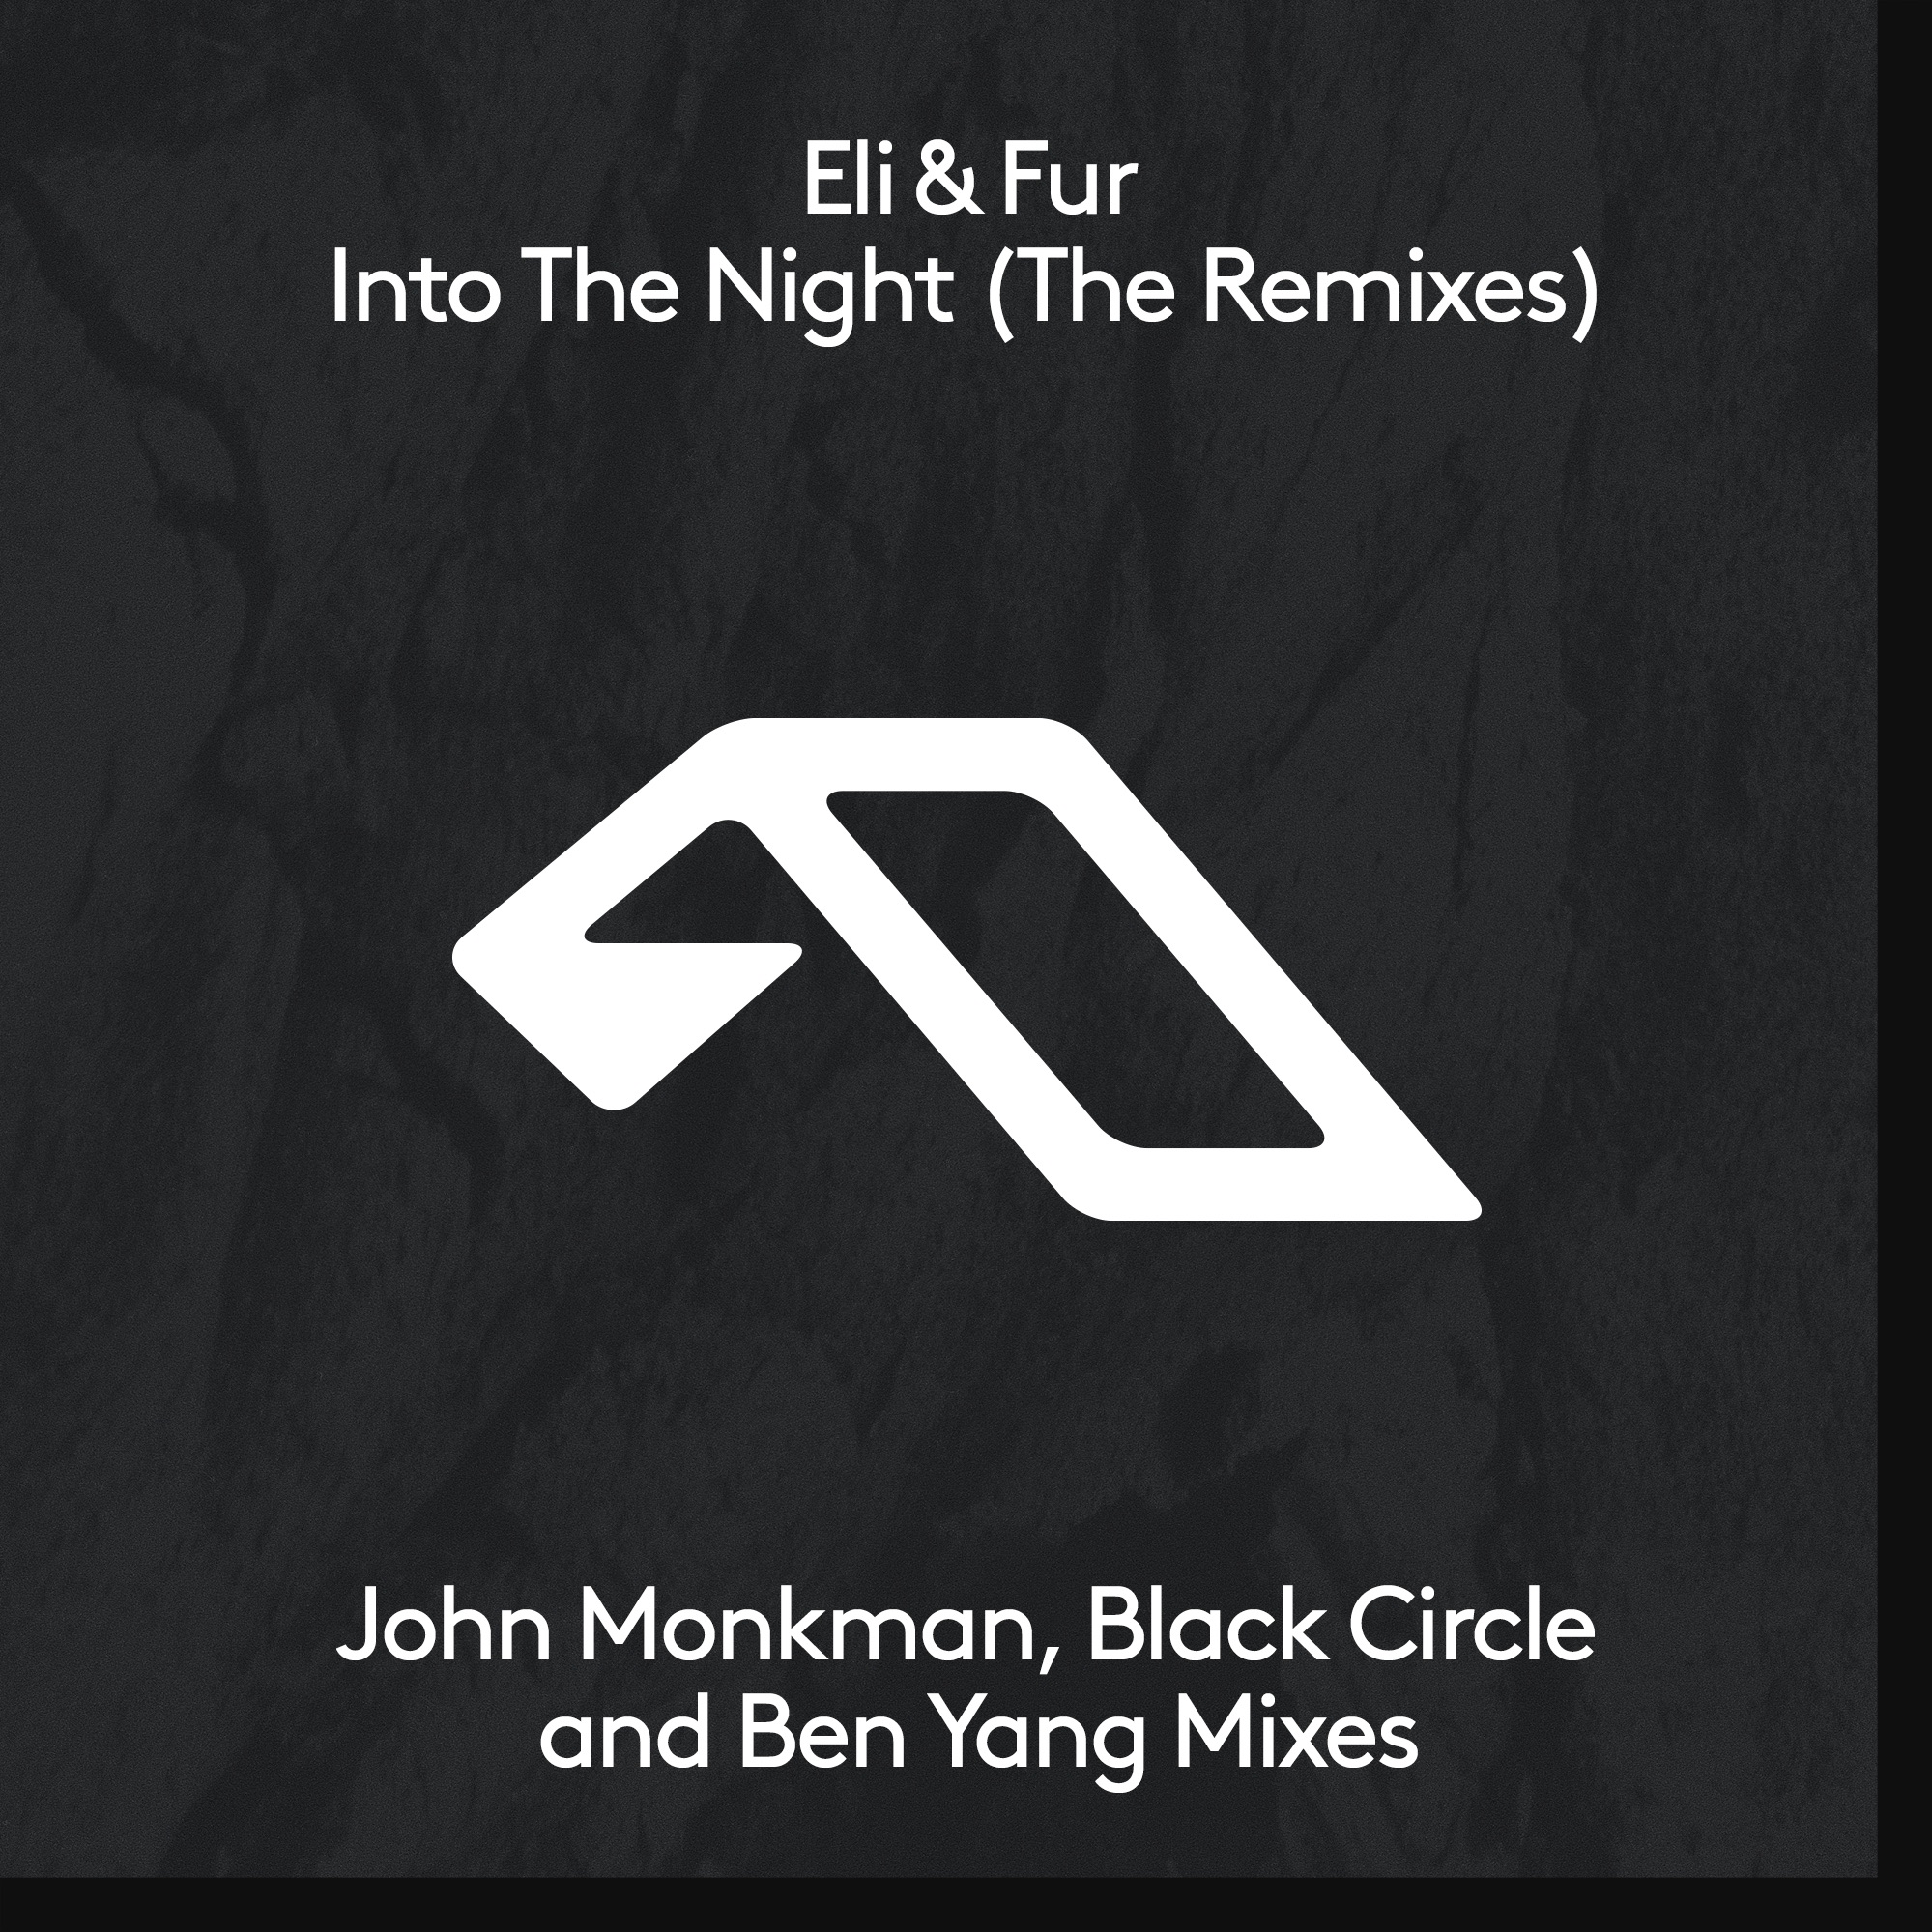 Eli & Fur - Into The Night (Ben Yang Remix)